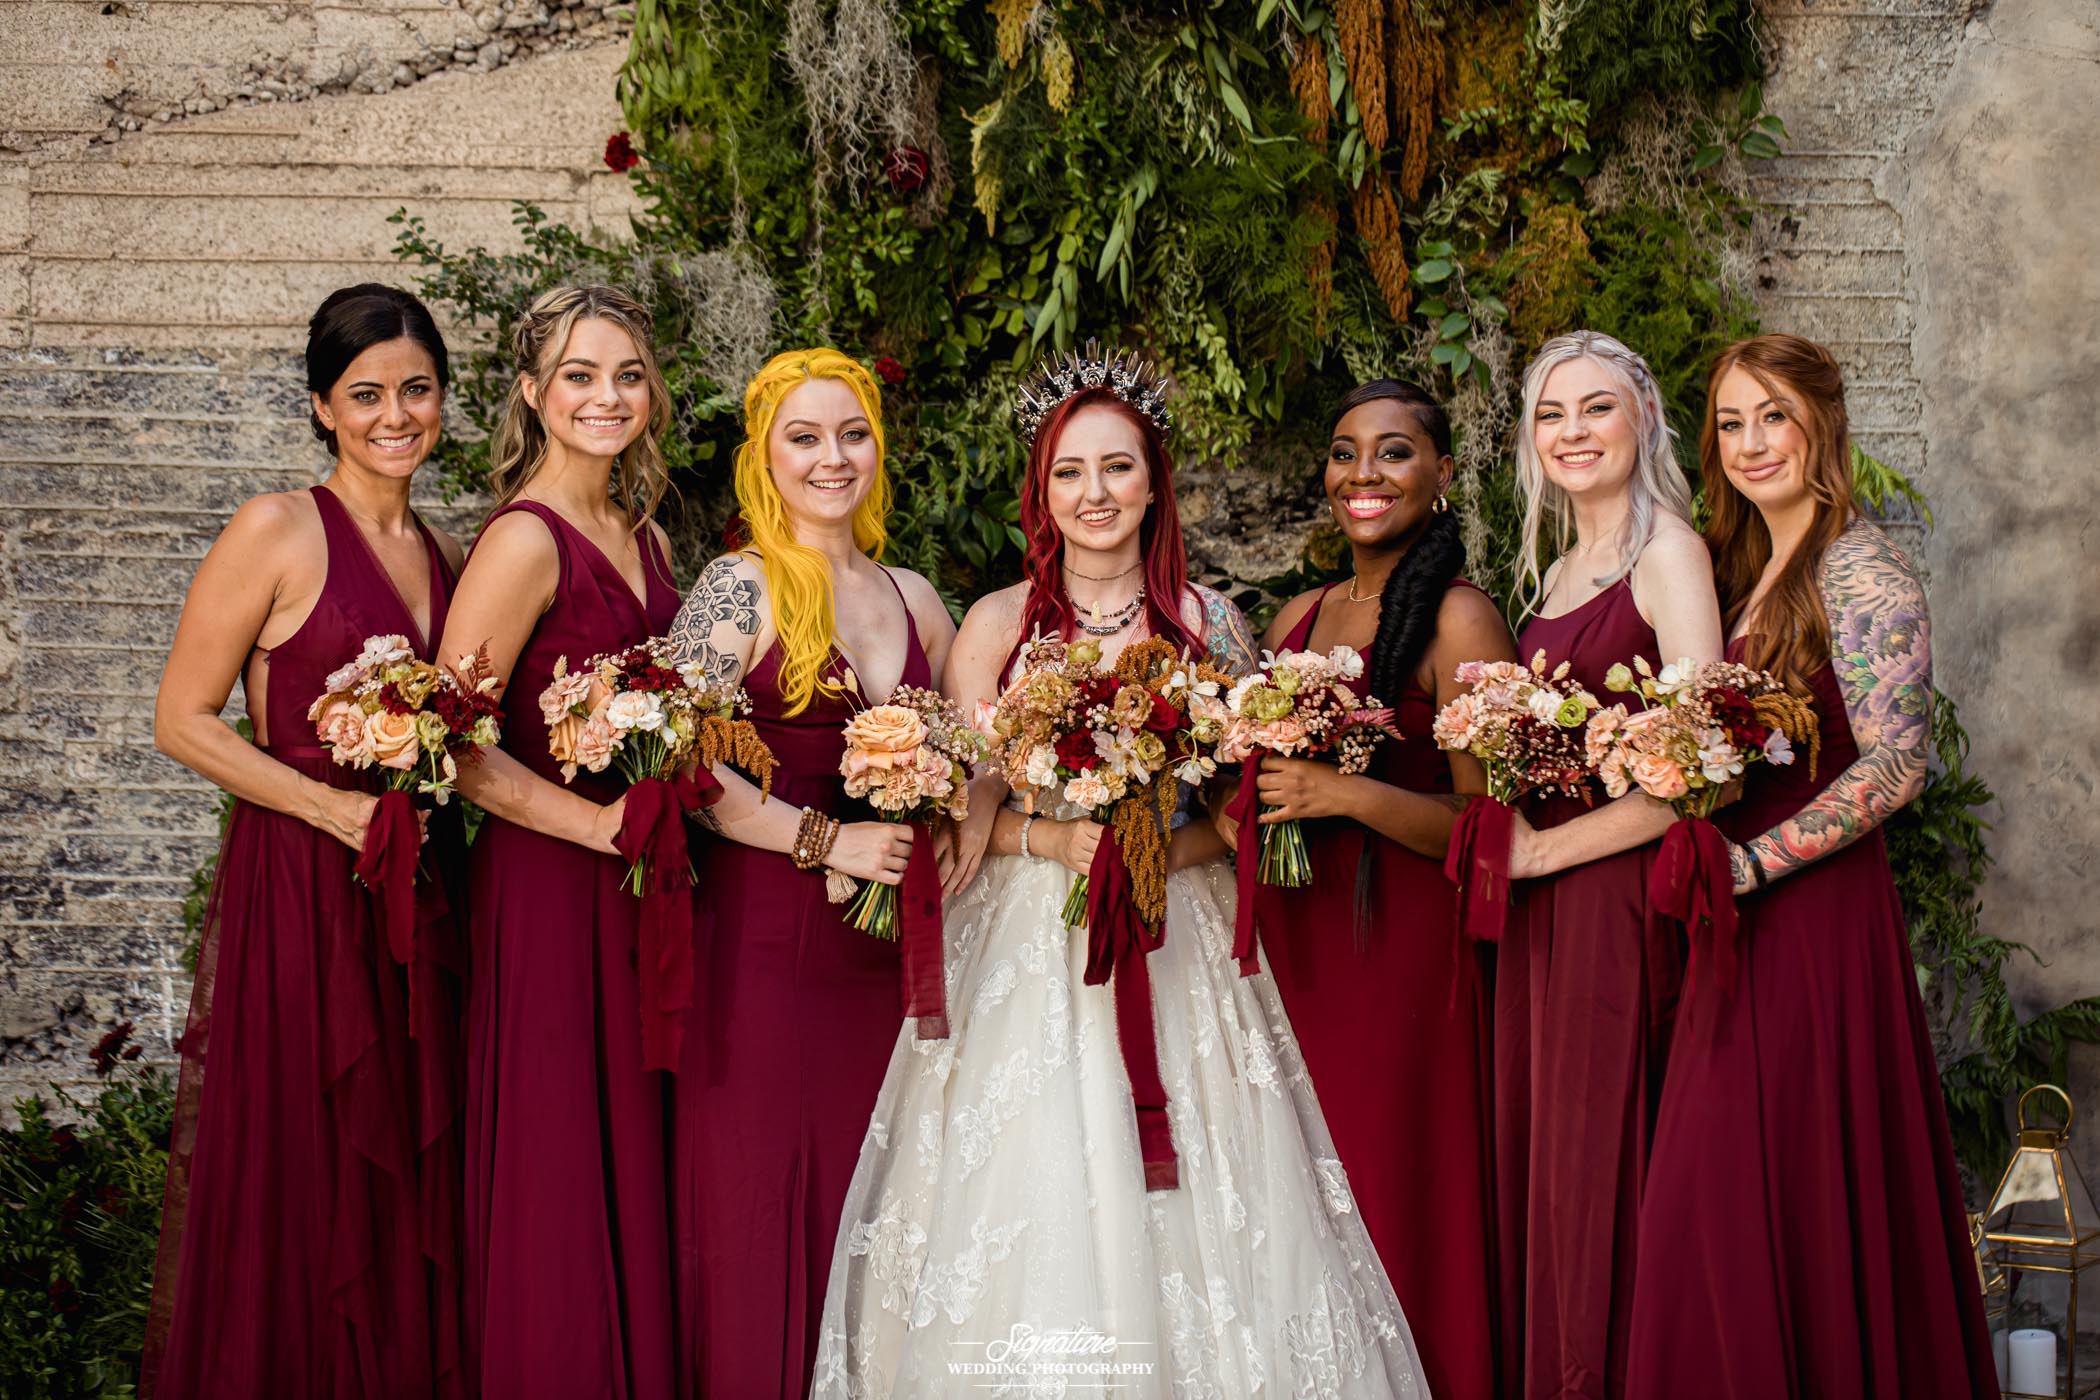 Bride with bridesmaids smiling